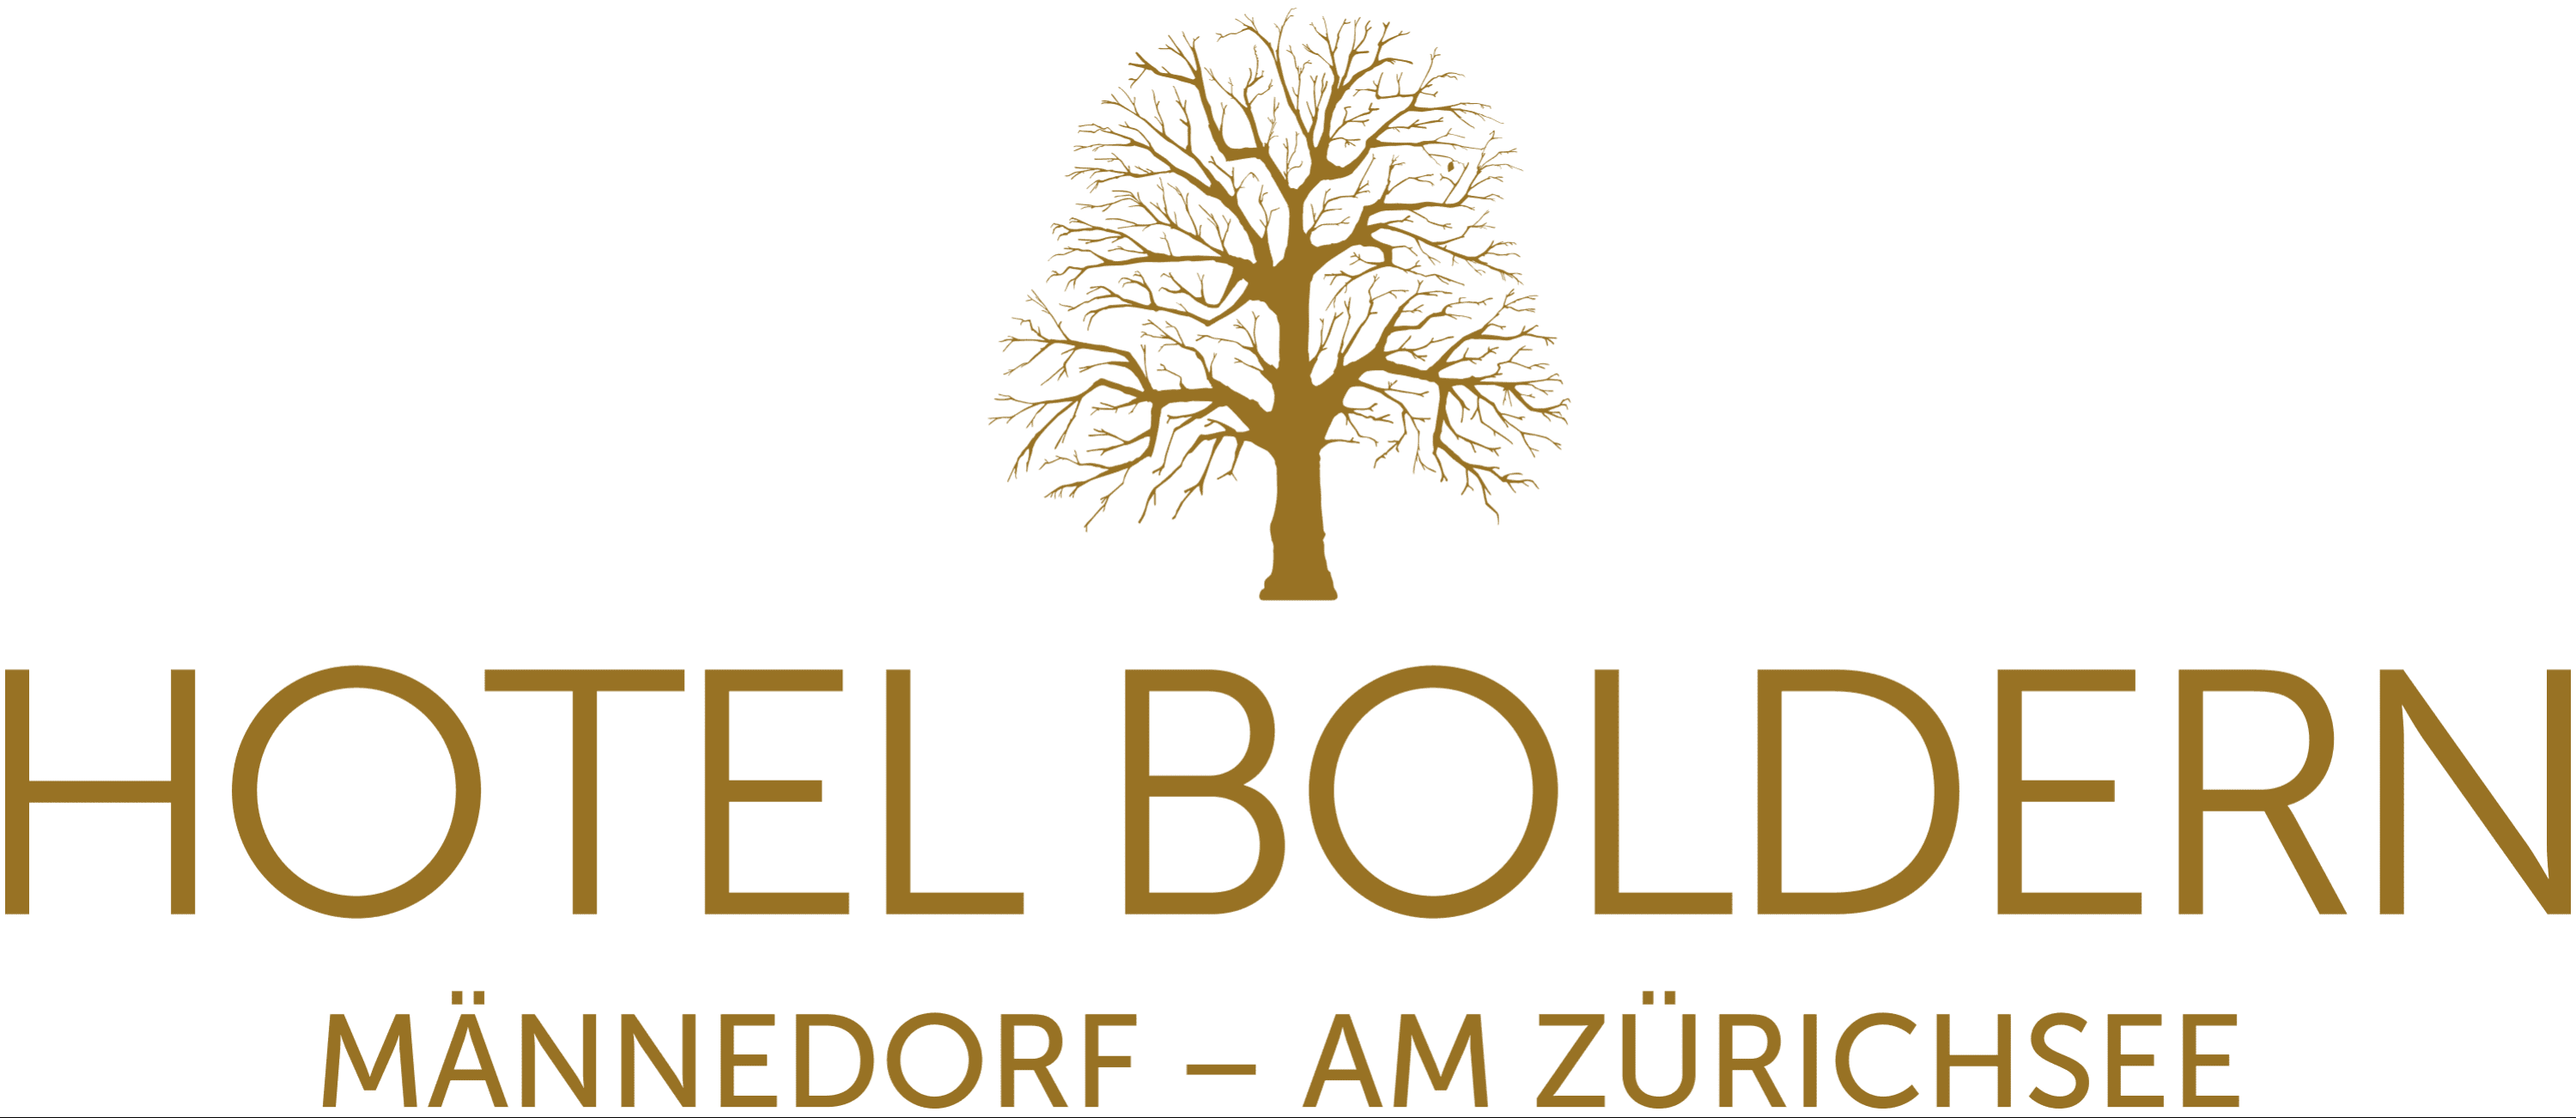 Hotel Boldern AG